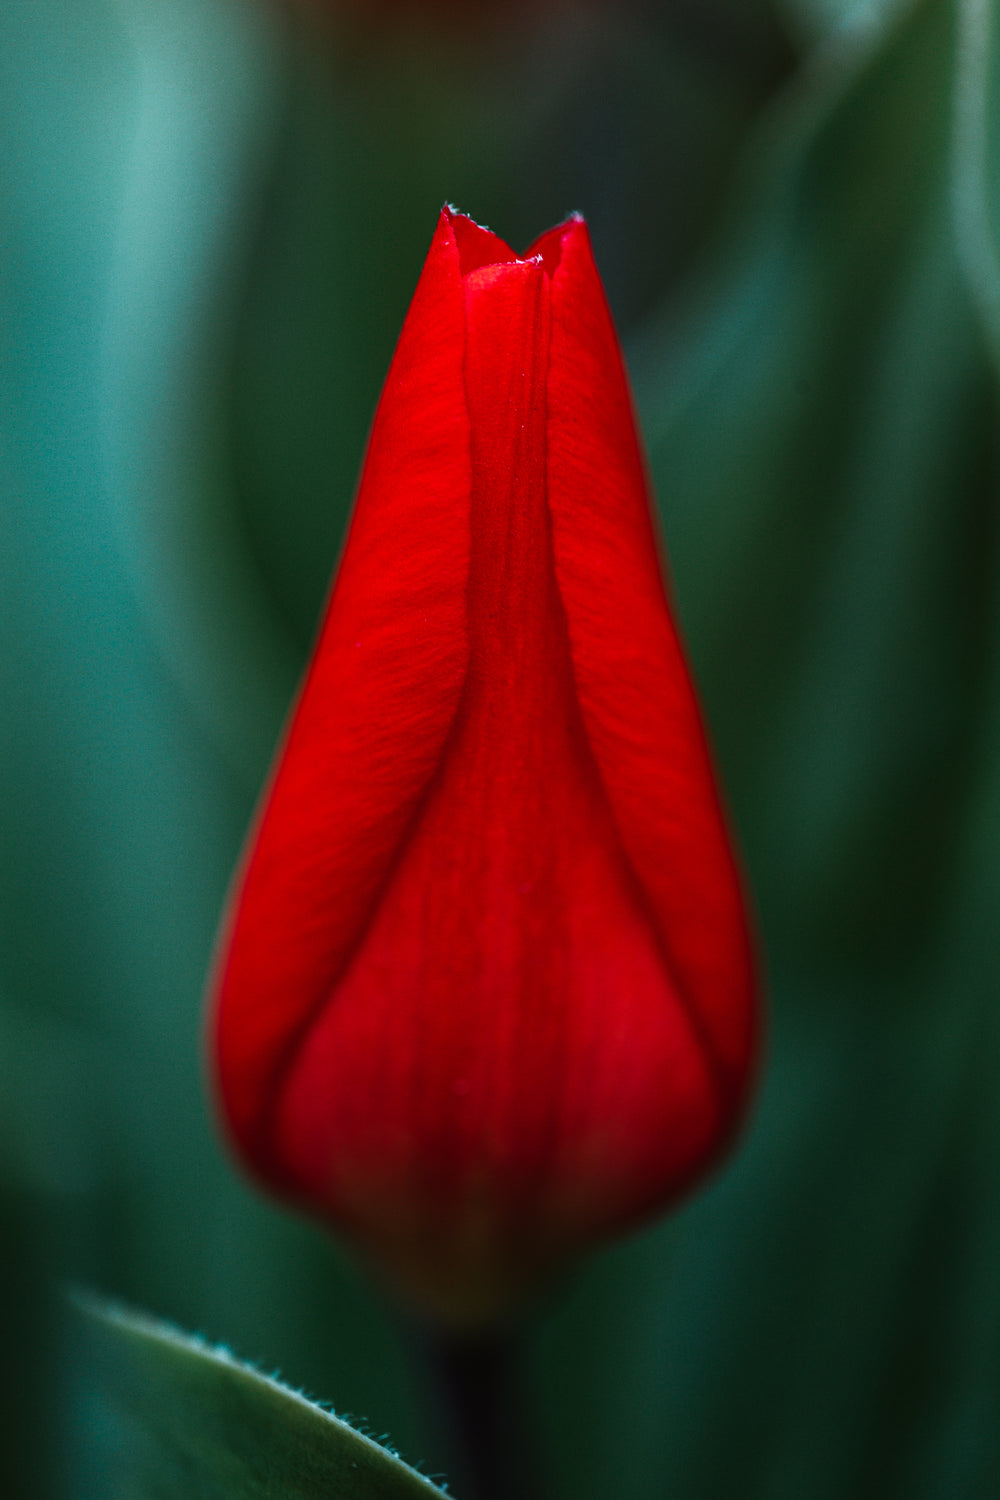 an illuminated red flower